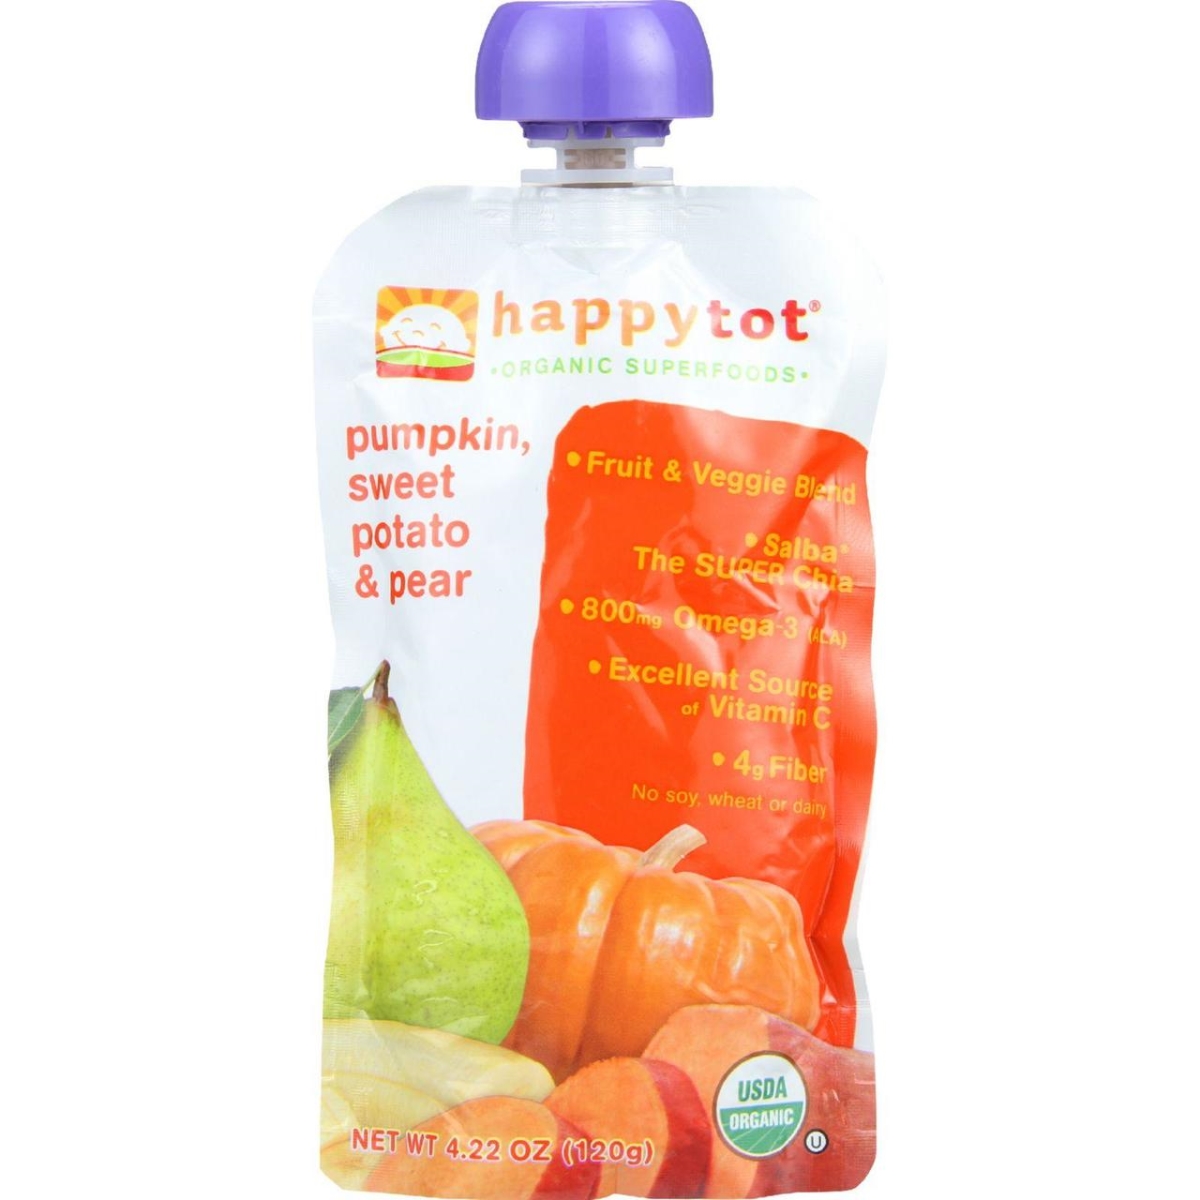 Hg1251255 4.22 Oz Organic Stage 4 Pumpkin Sweet Potato & Pear Toddler Food - Case Of 16